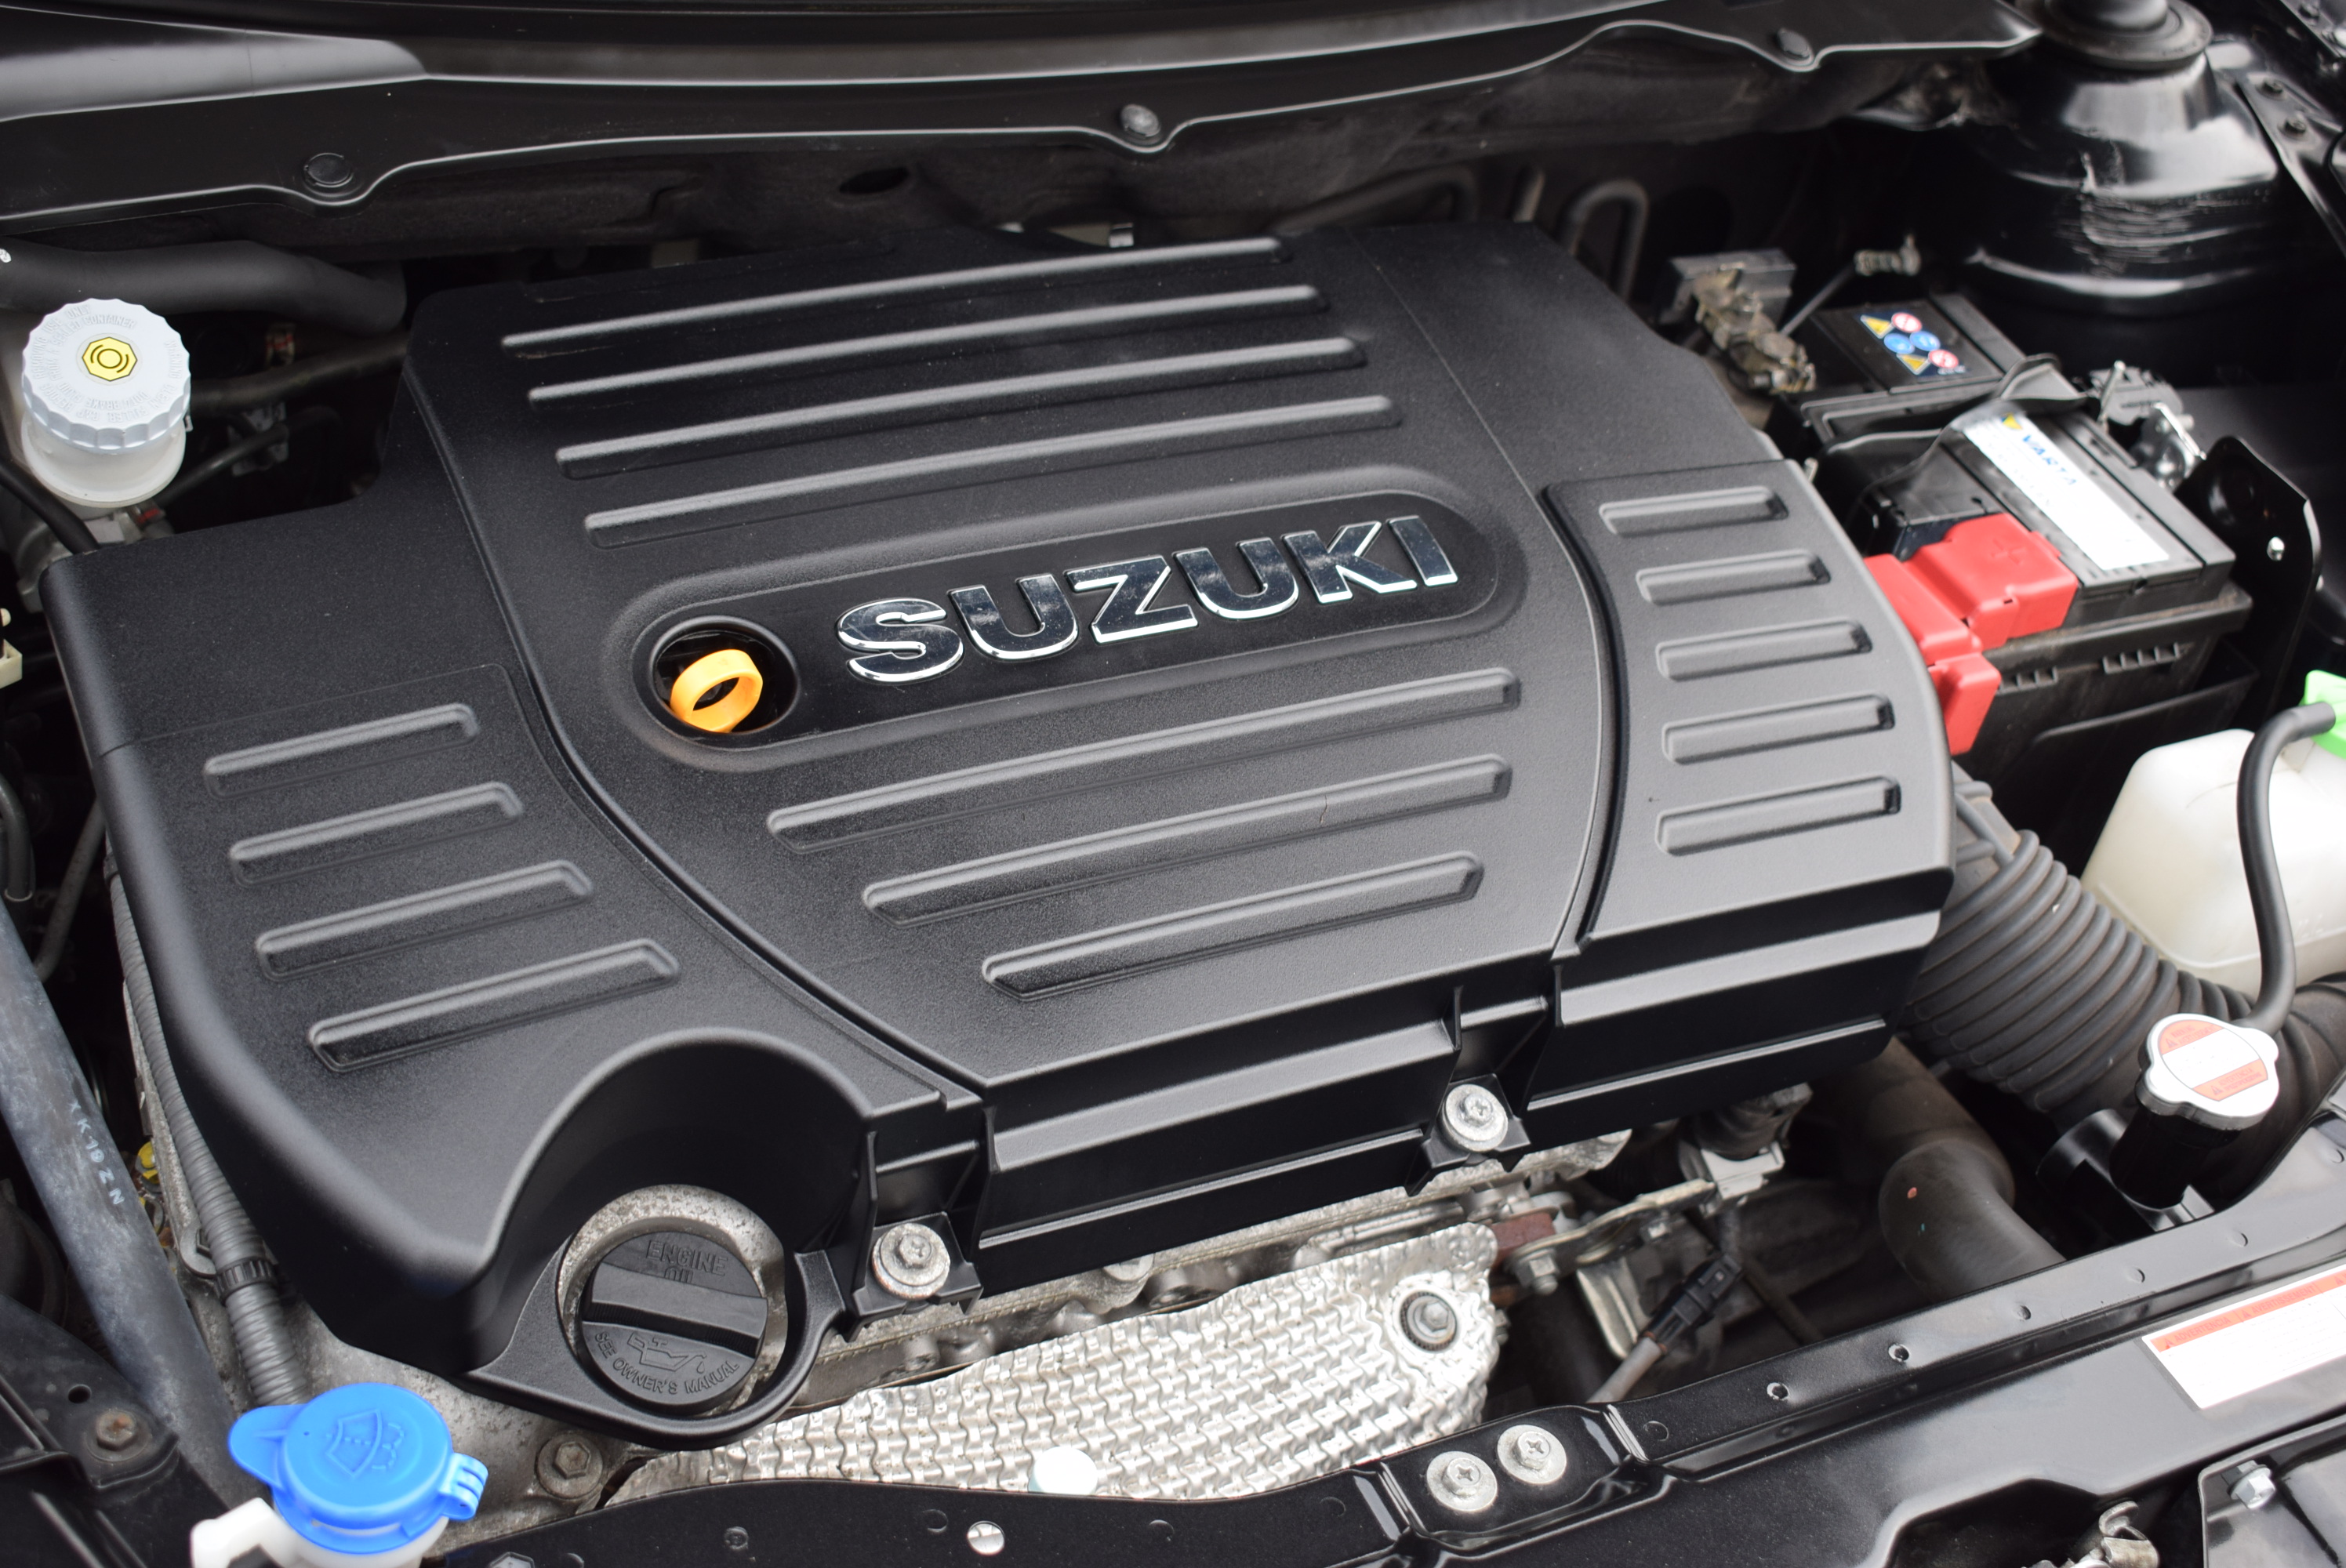 SUZUKI SWIFT 1.6 Sport 3dr For Sale Richlee Motor Co. Ltd